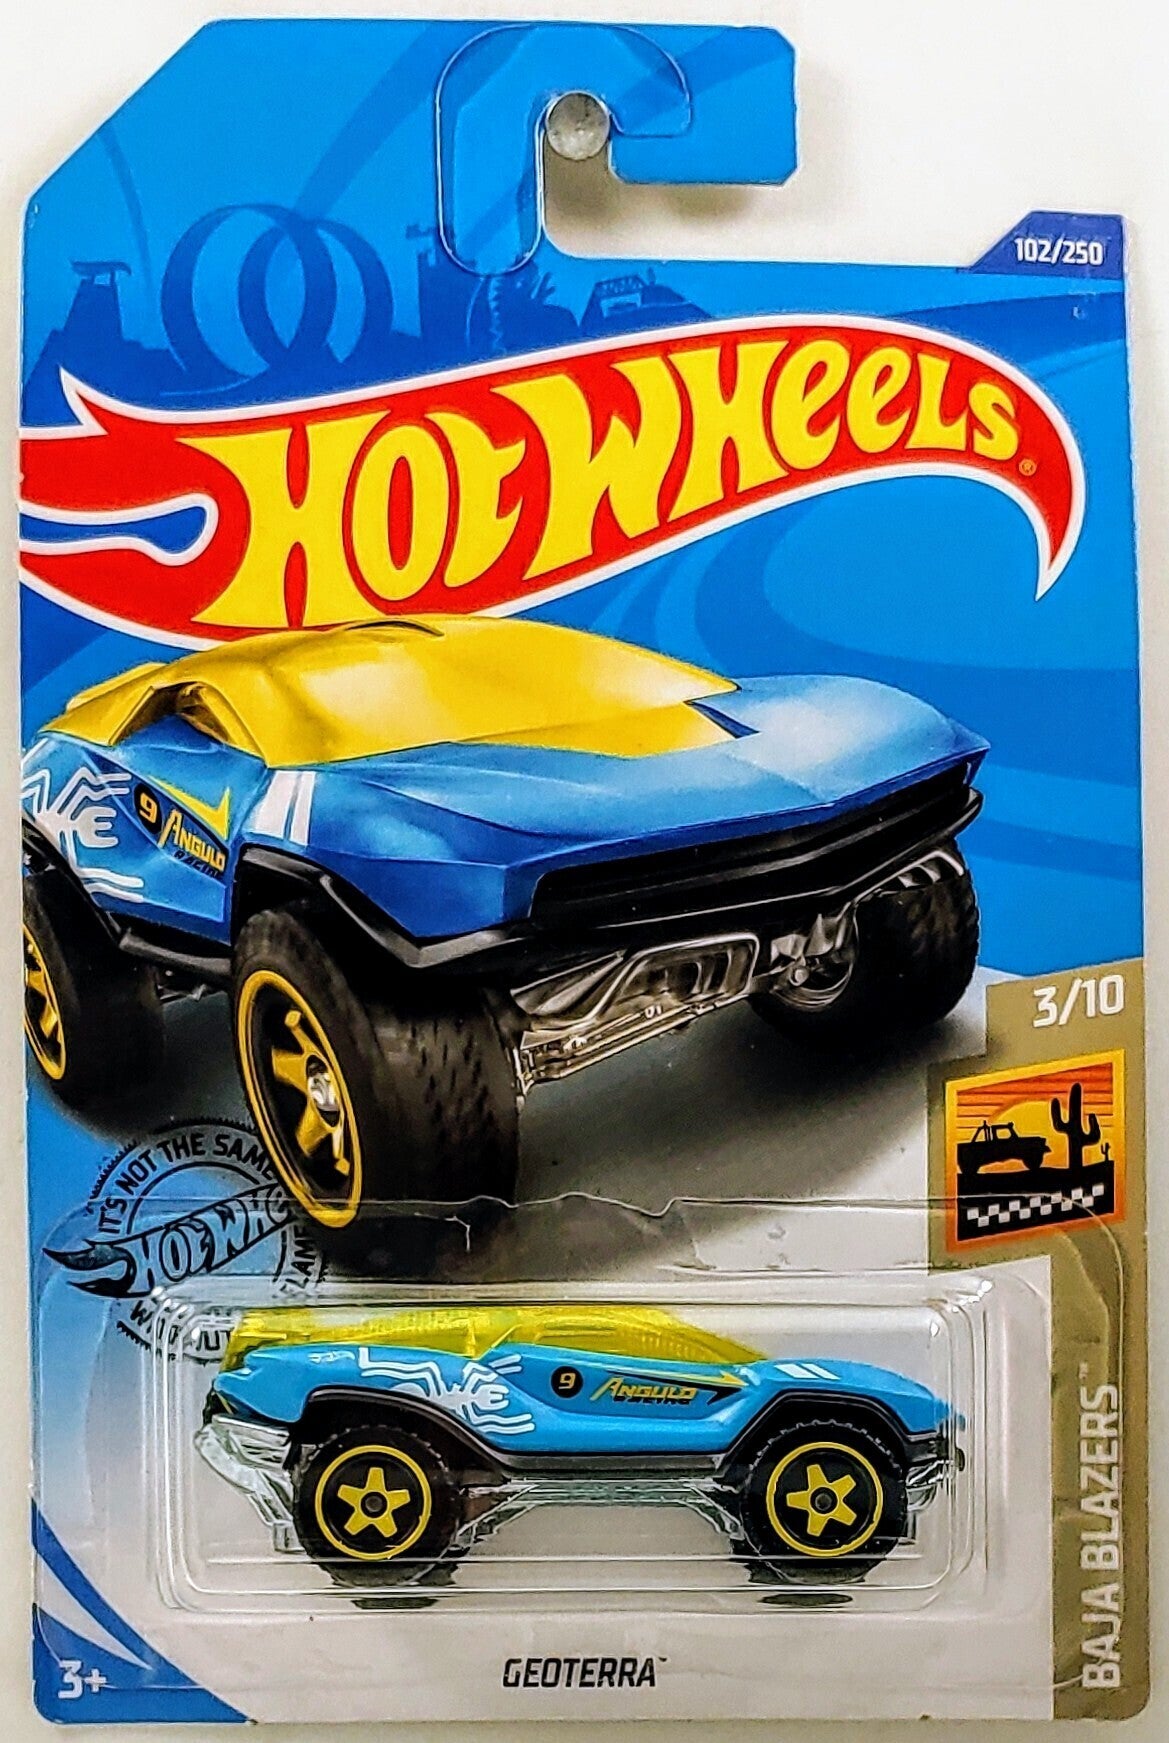 Hot Wheels 2020 - Collector # 102/250 - Baja Blazers 3/10 - New Models - Geoterra - Blue - IC